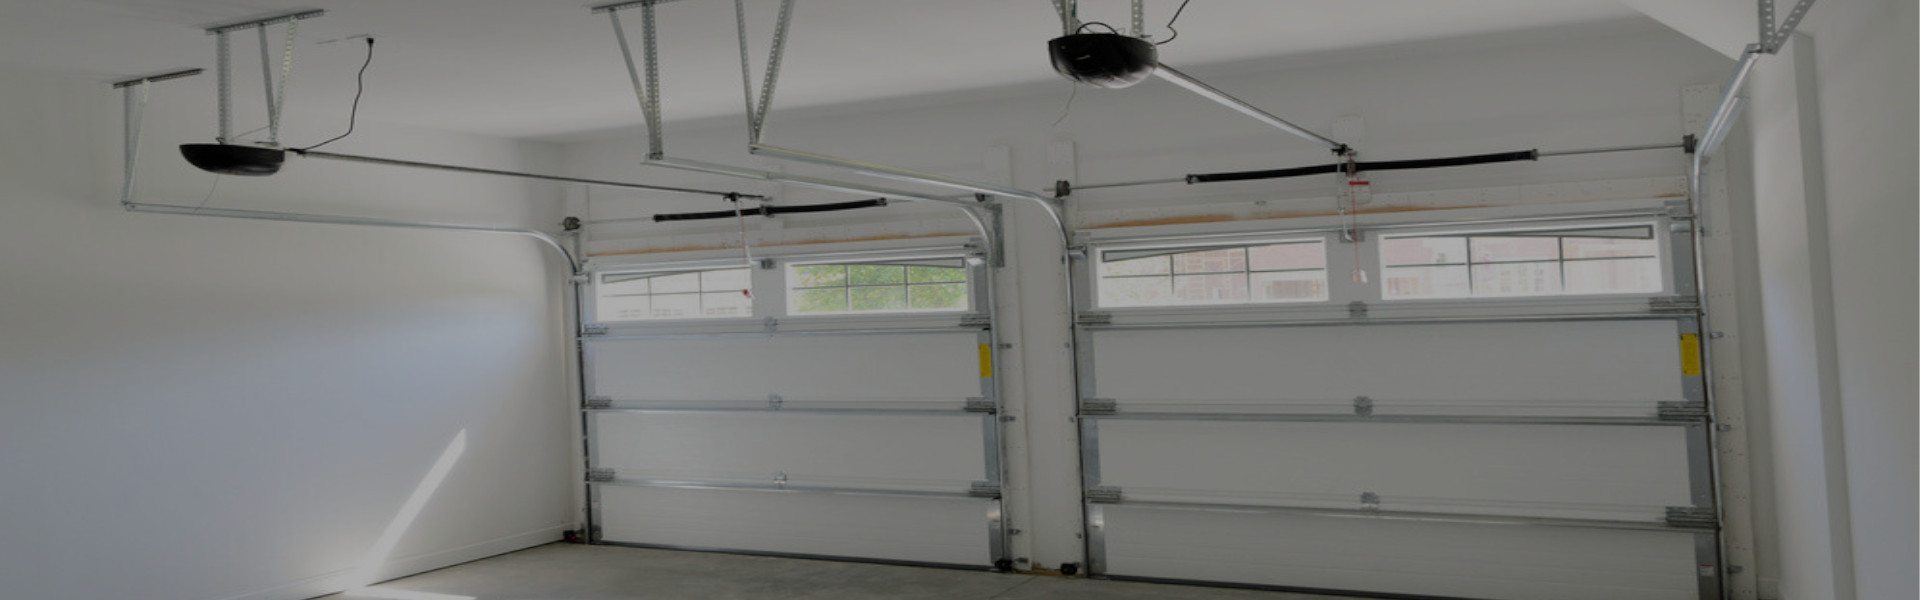 Slider Garage Door Repair, Glaziers in Bayswater, W2